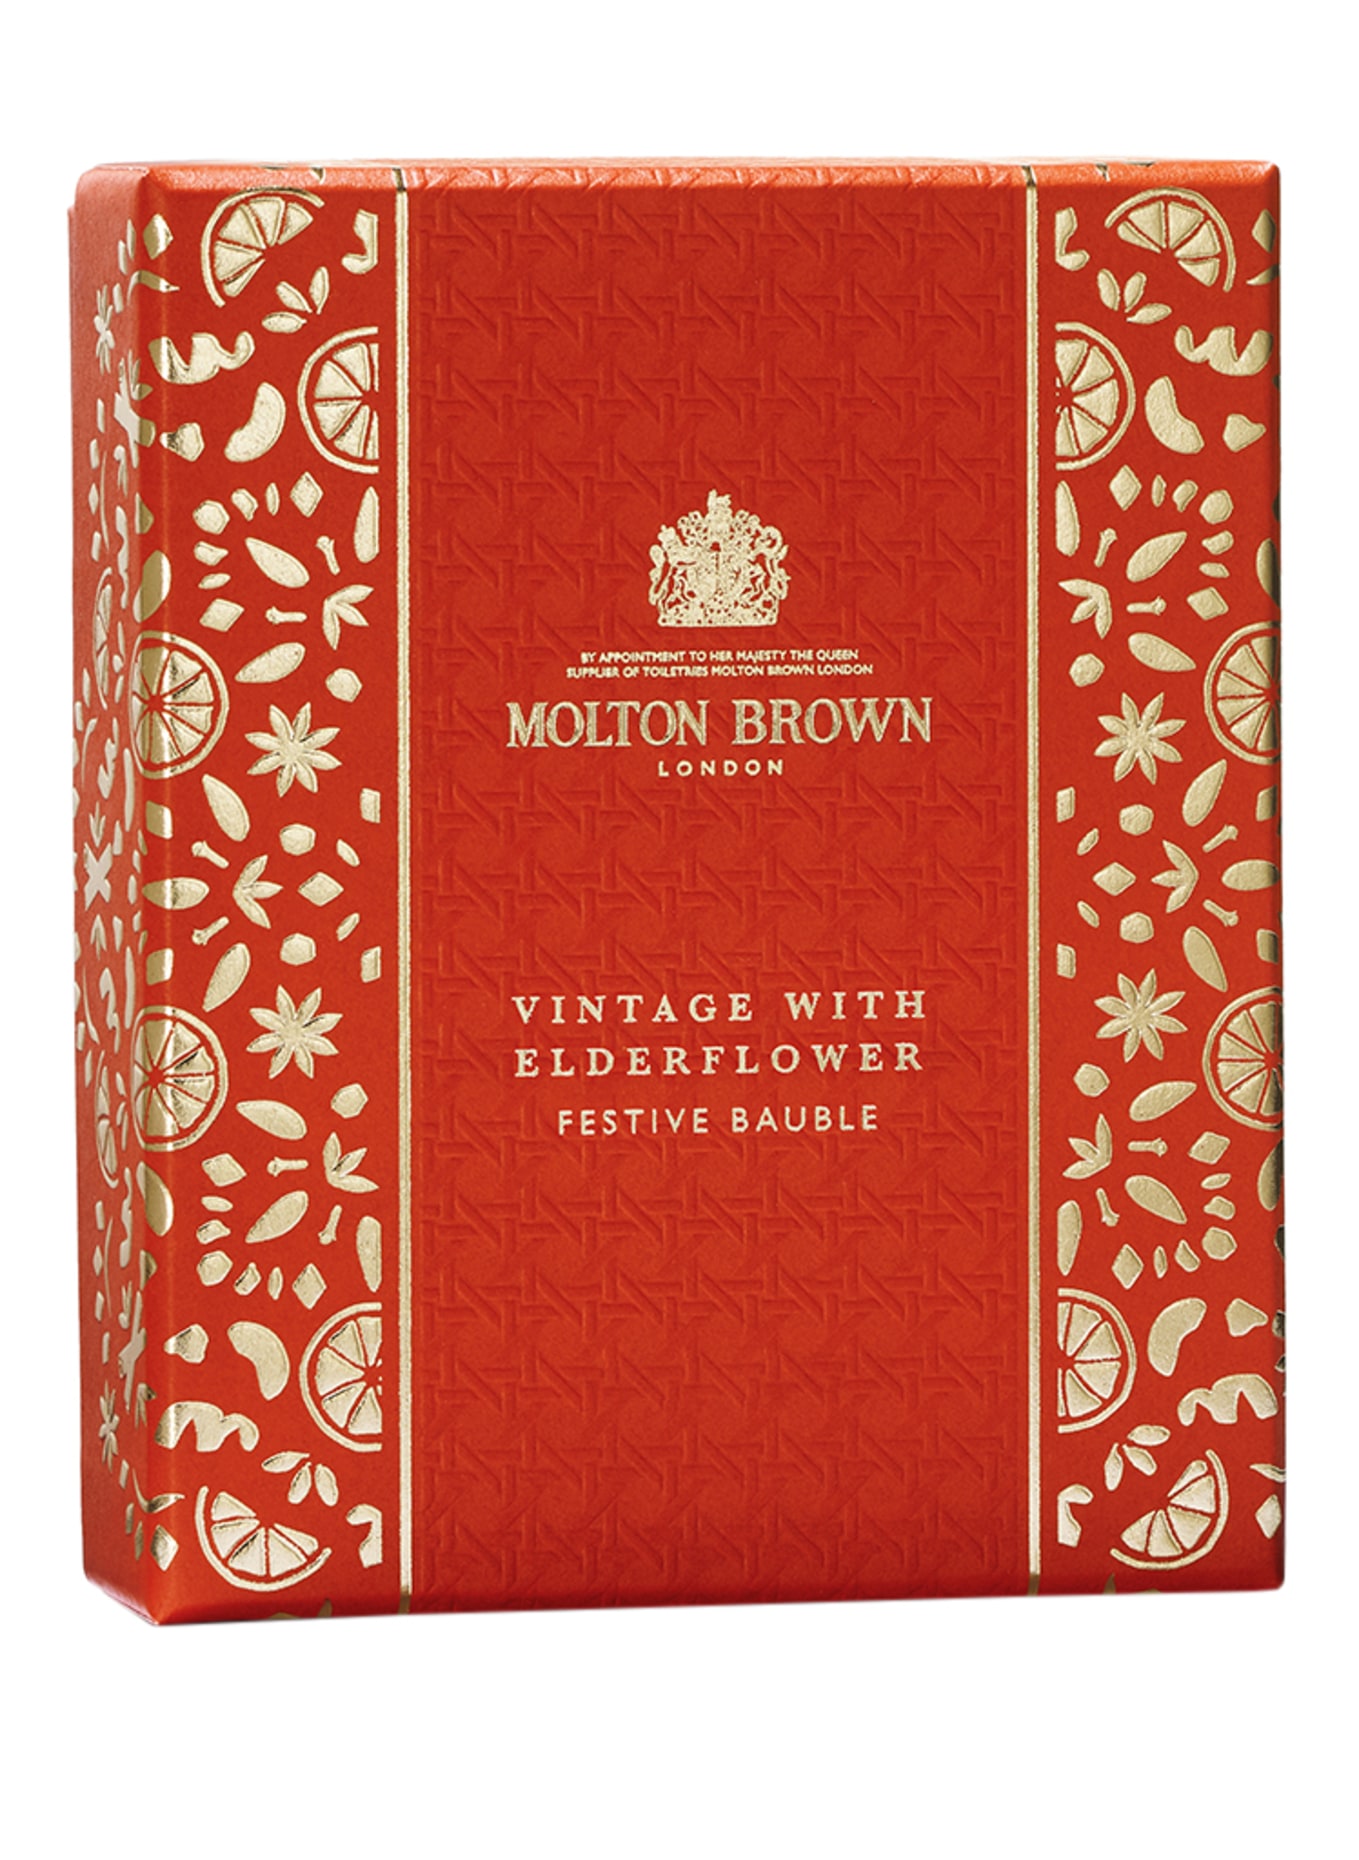 MOLTON BROWN VINTAGE WITH ELDERFLOWER (Obrázek 2)